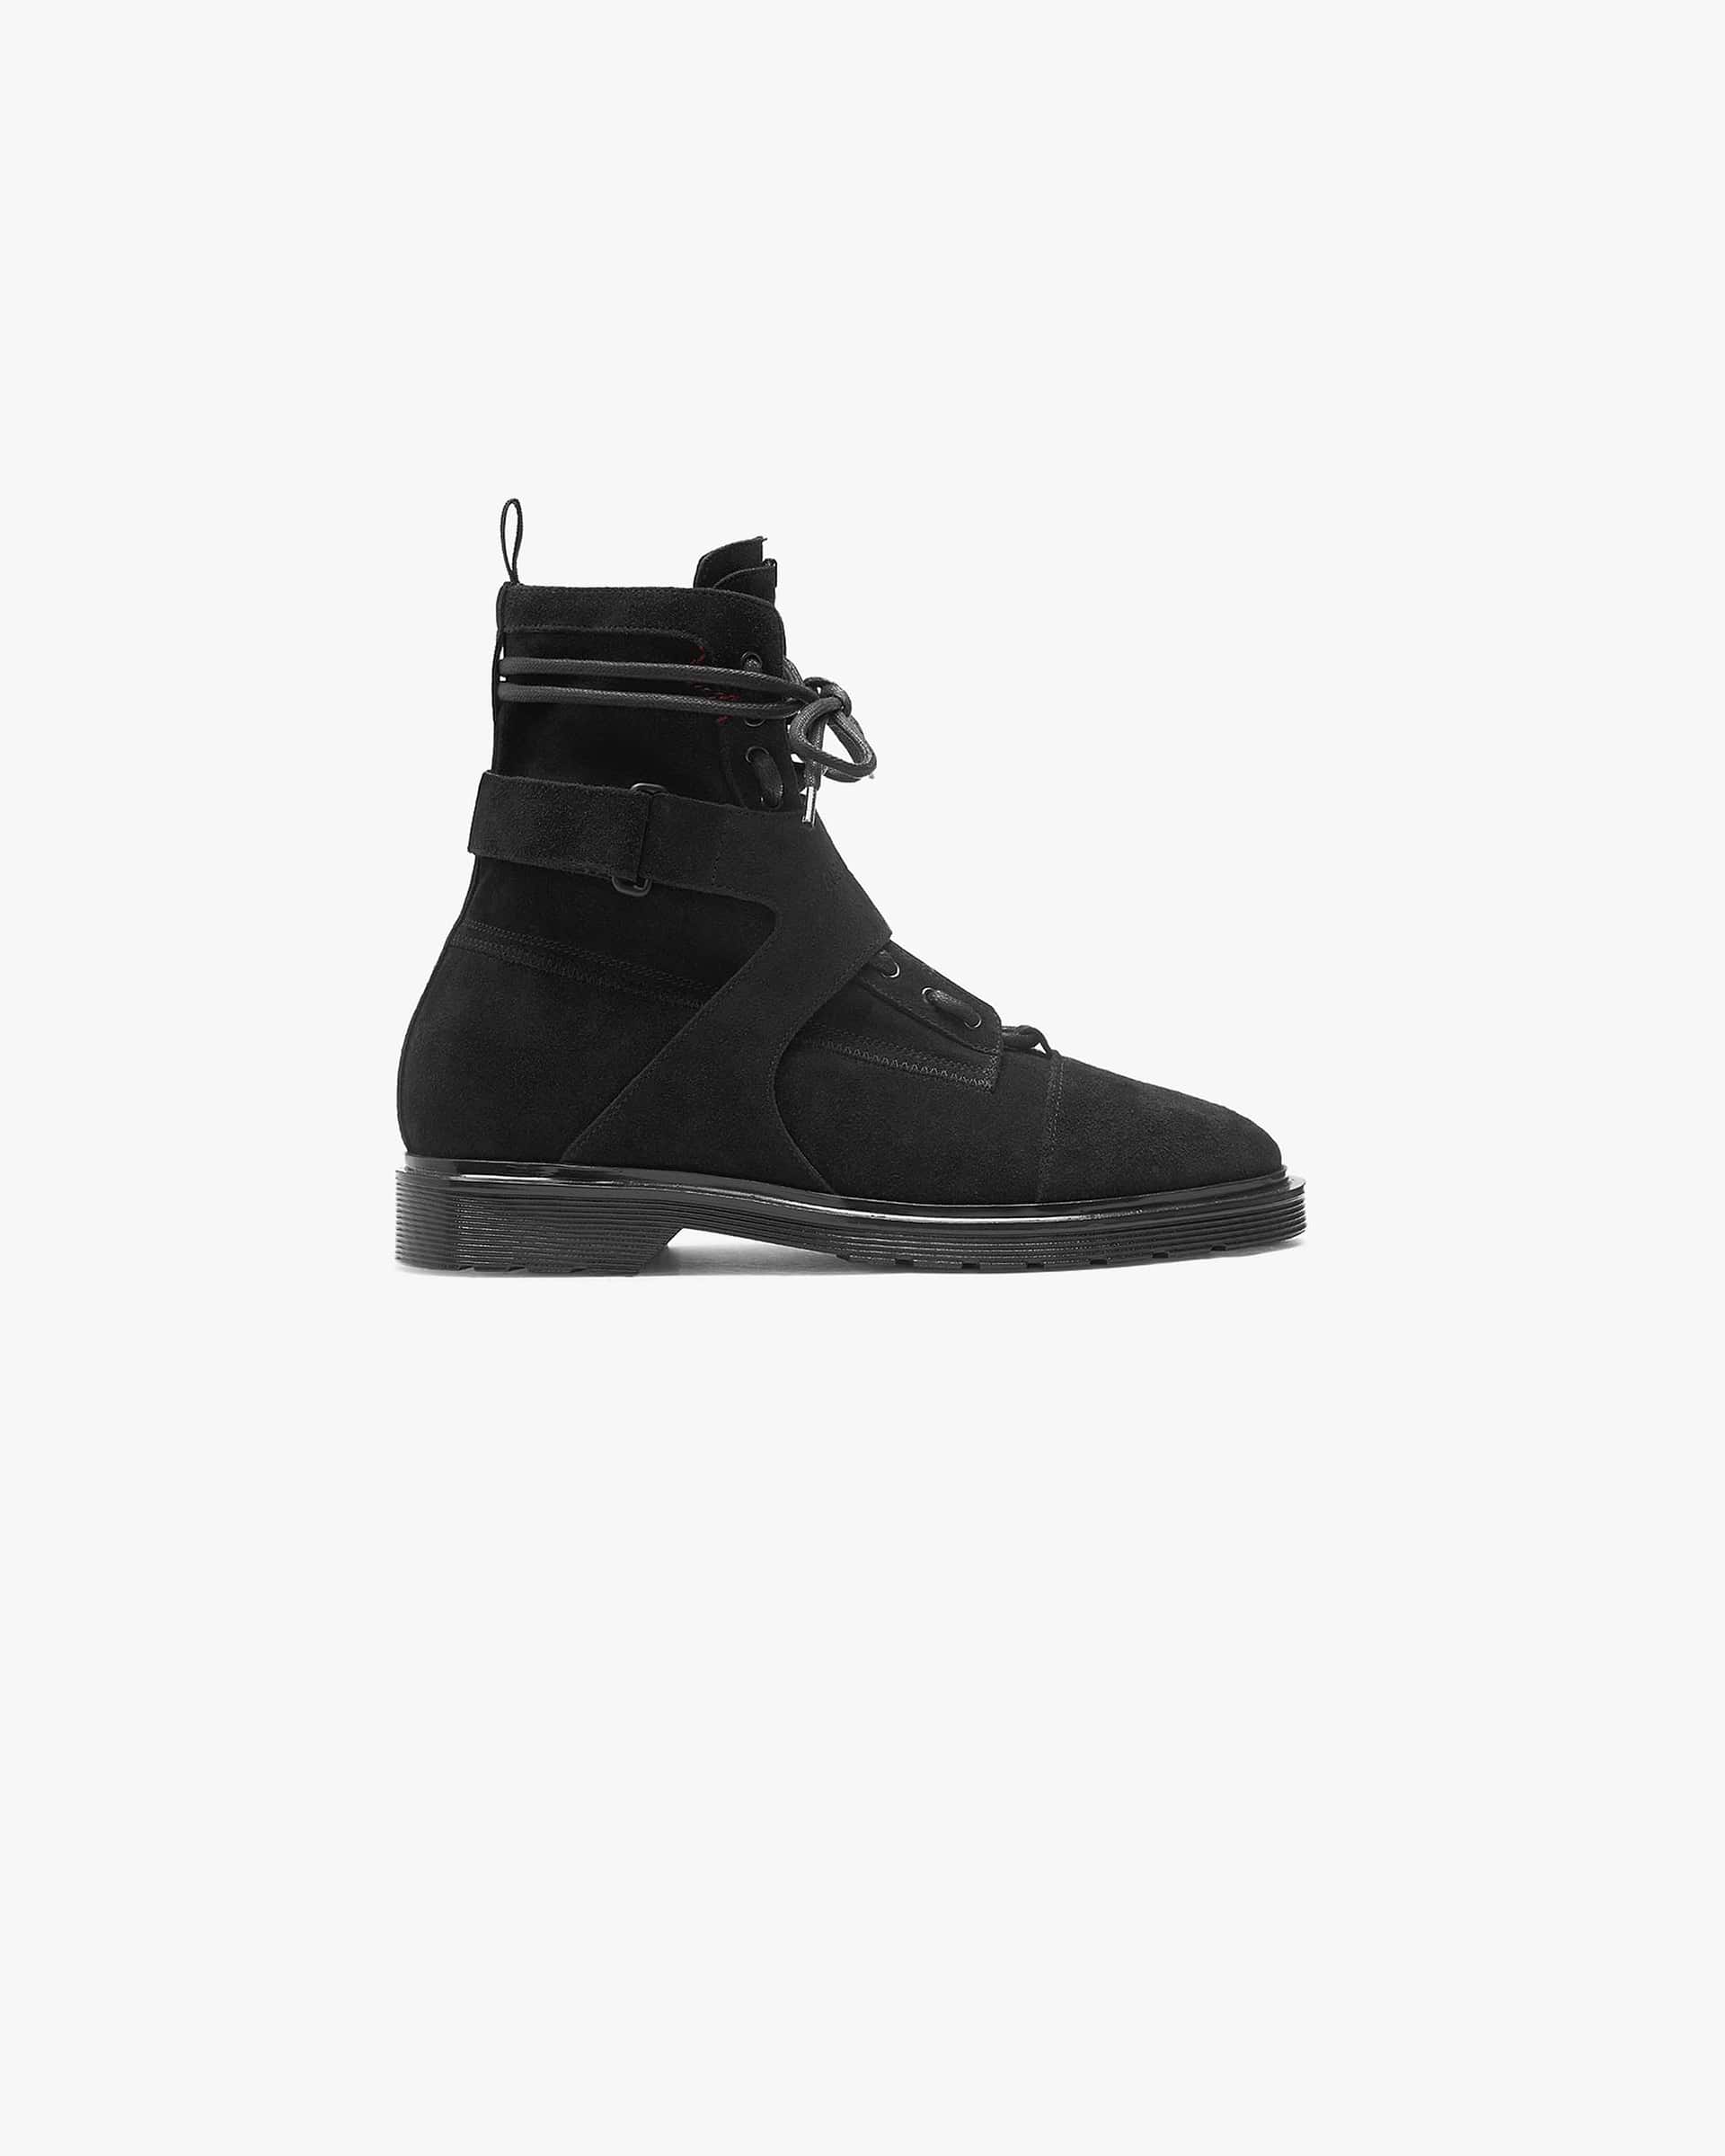 Work Boot | Black Suede Footwear BF20 | Represent Clo